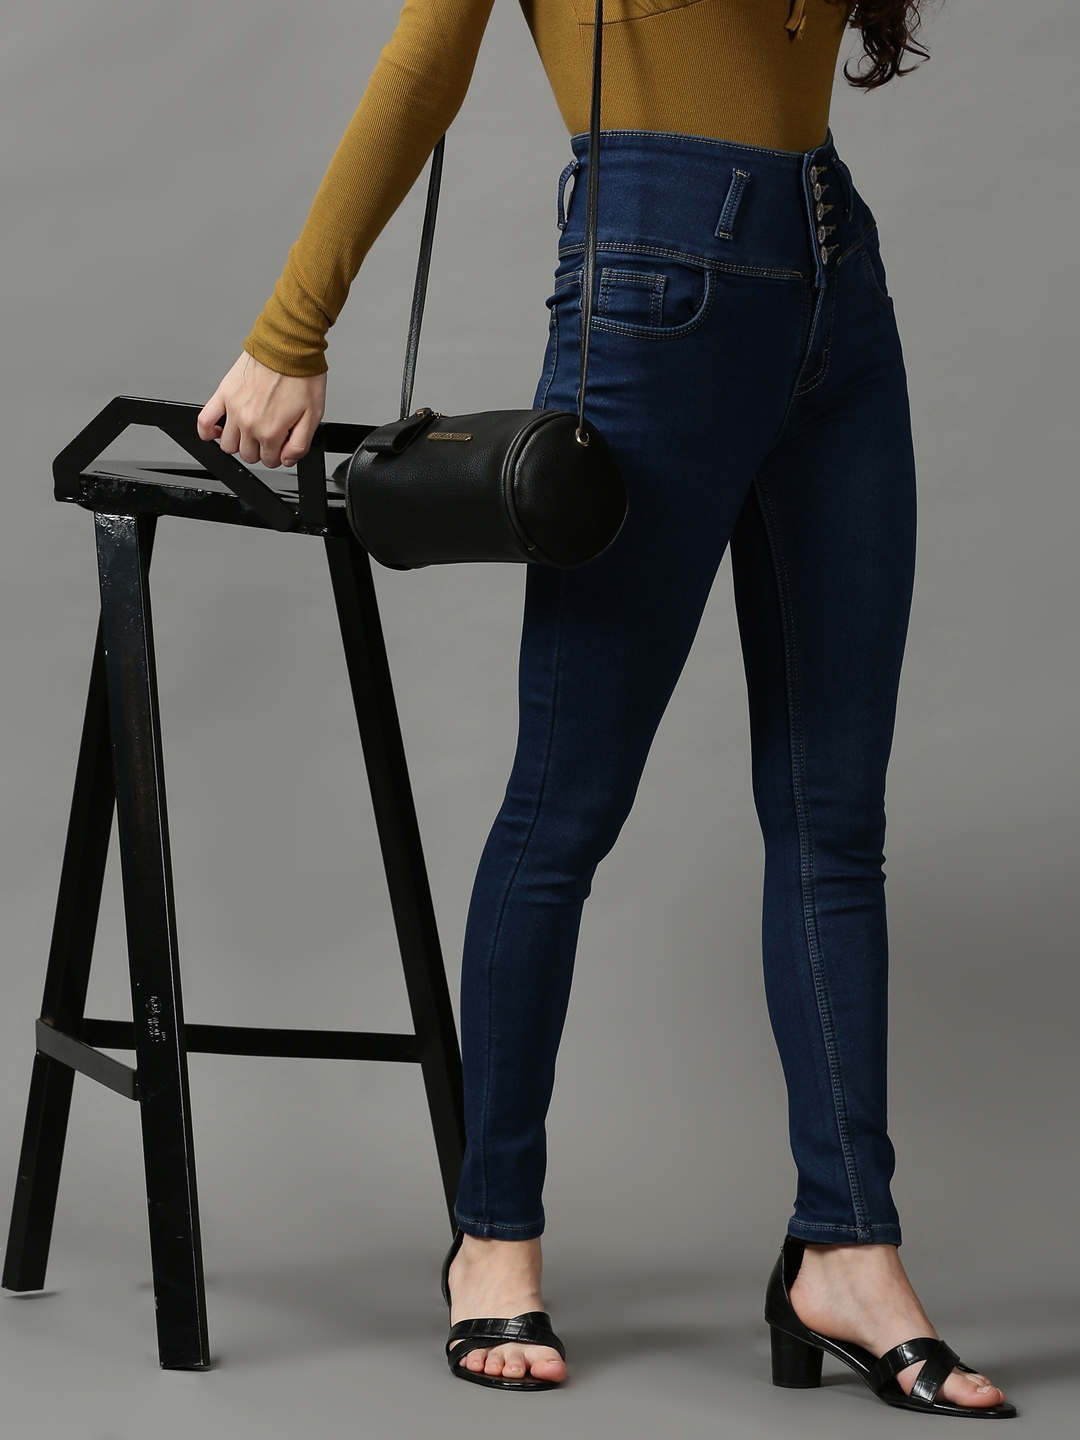 Showoff | SHOWOFF Women's Clean Look Skinny Fit Navy Blue Denim Jeans